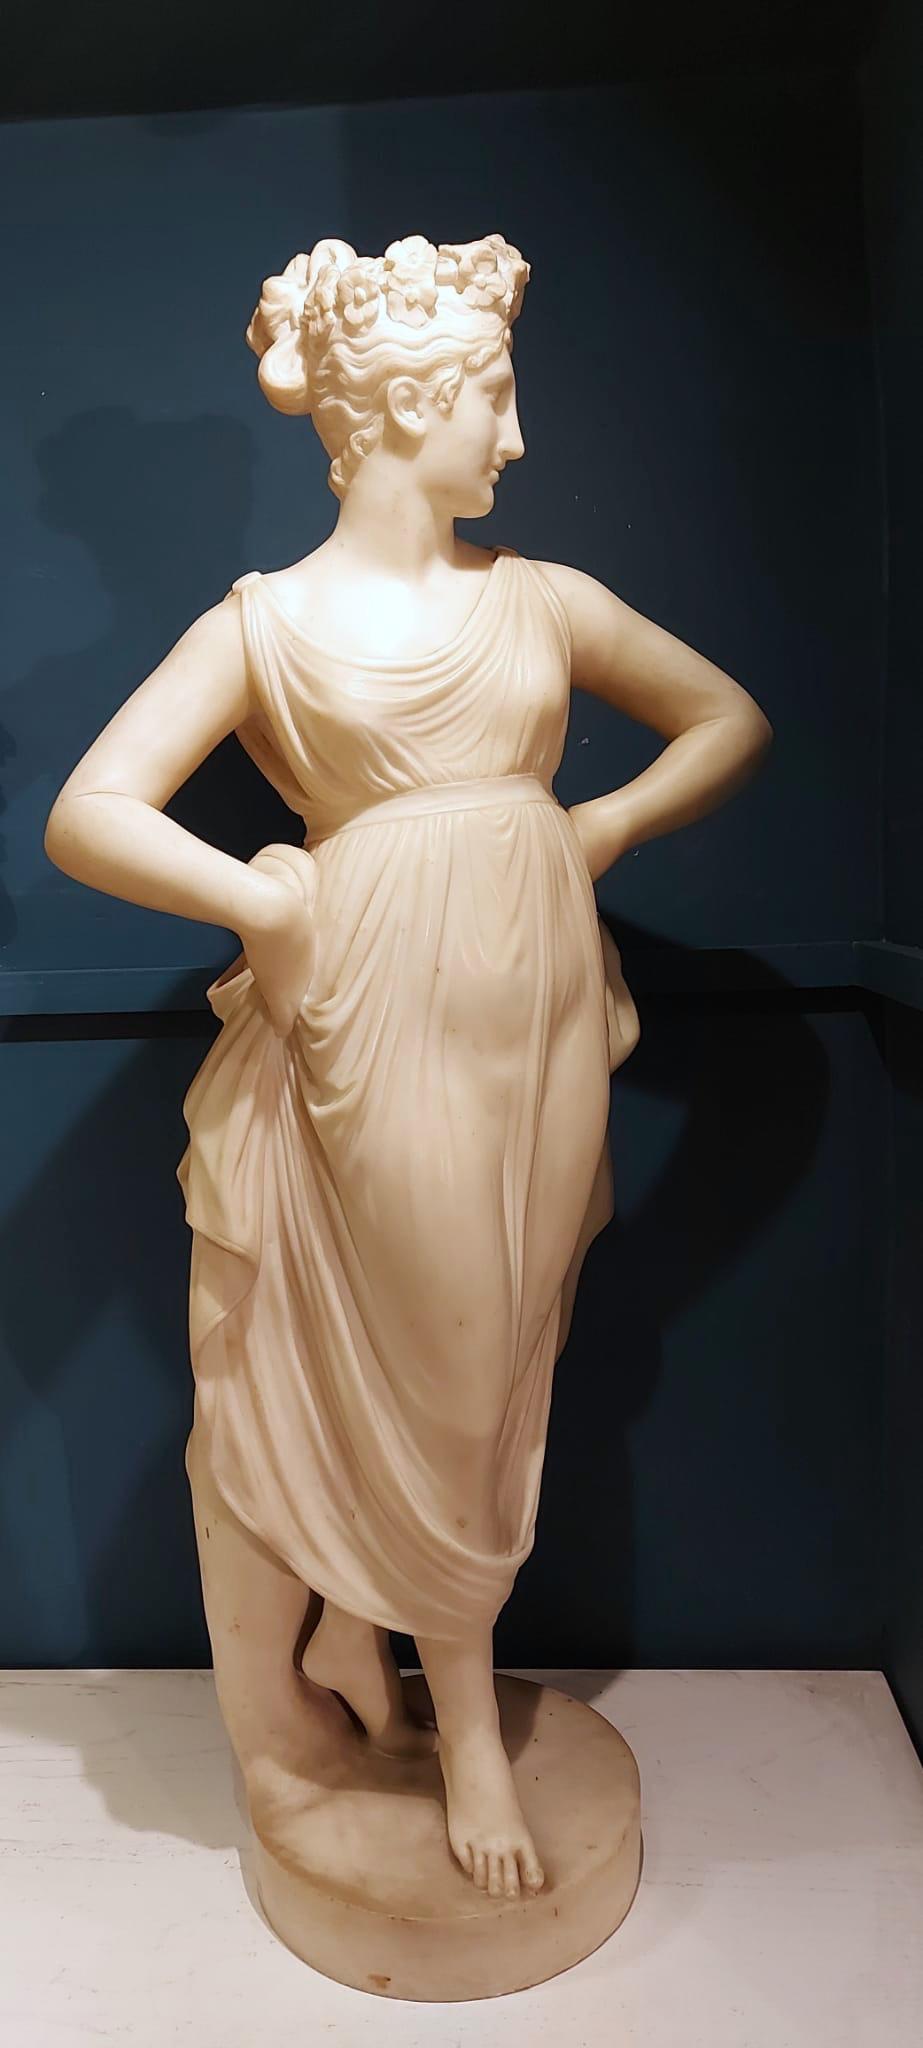 antonio creator of the marble neoclassical